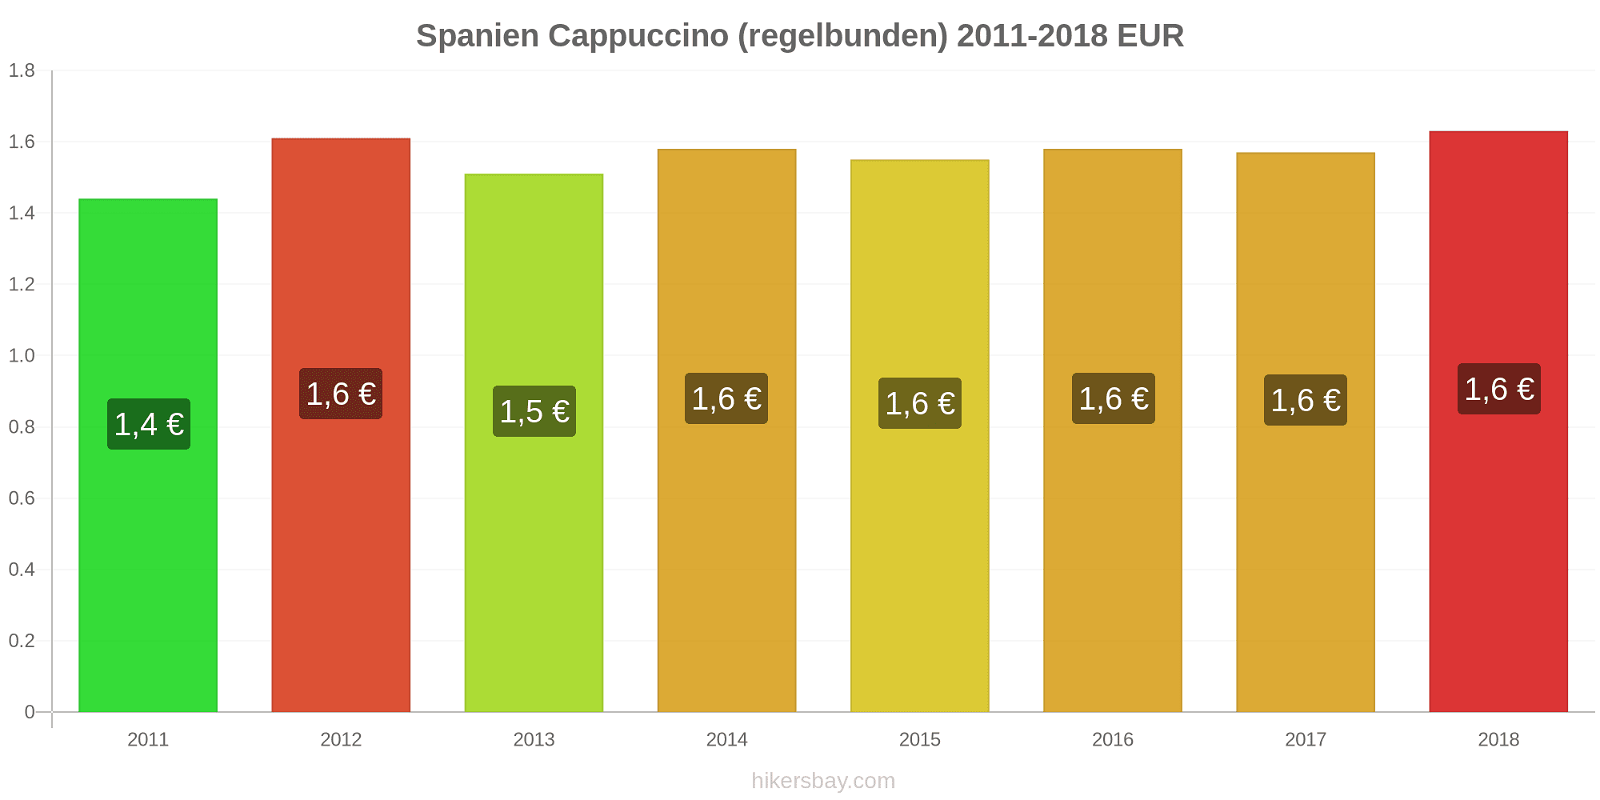 Spanien prisändringar Cappuccino hikersbay.com